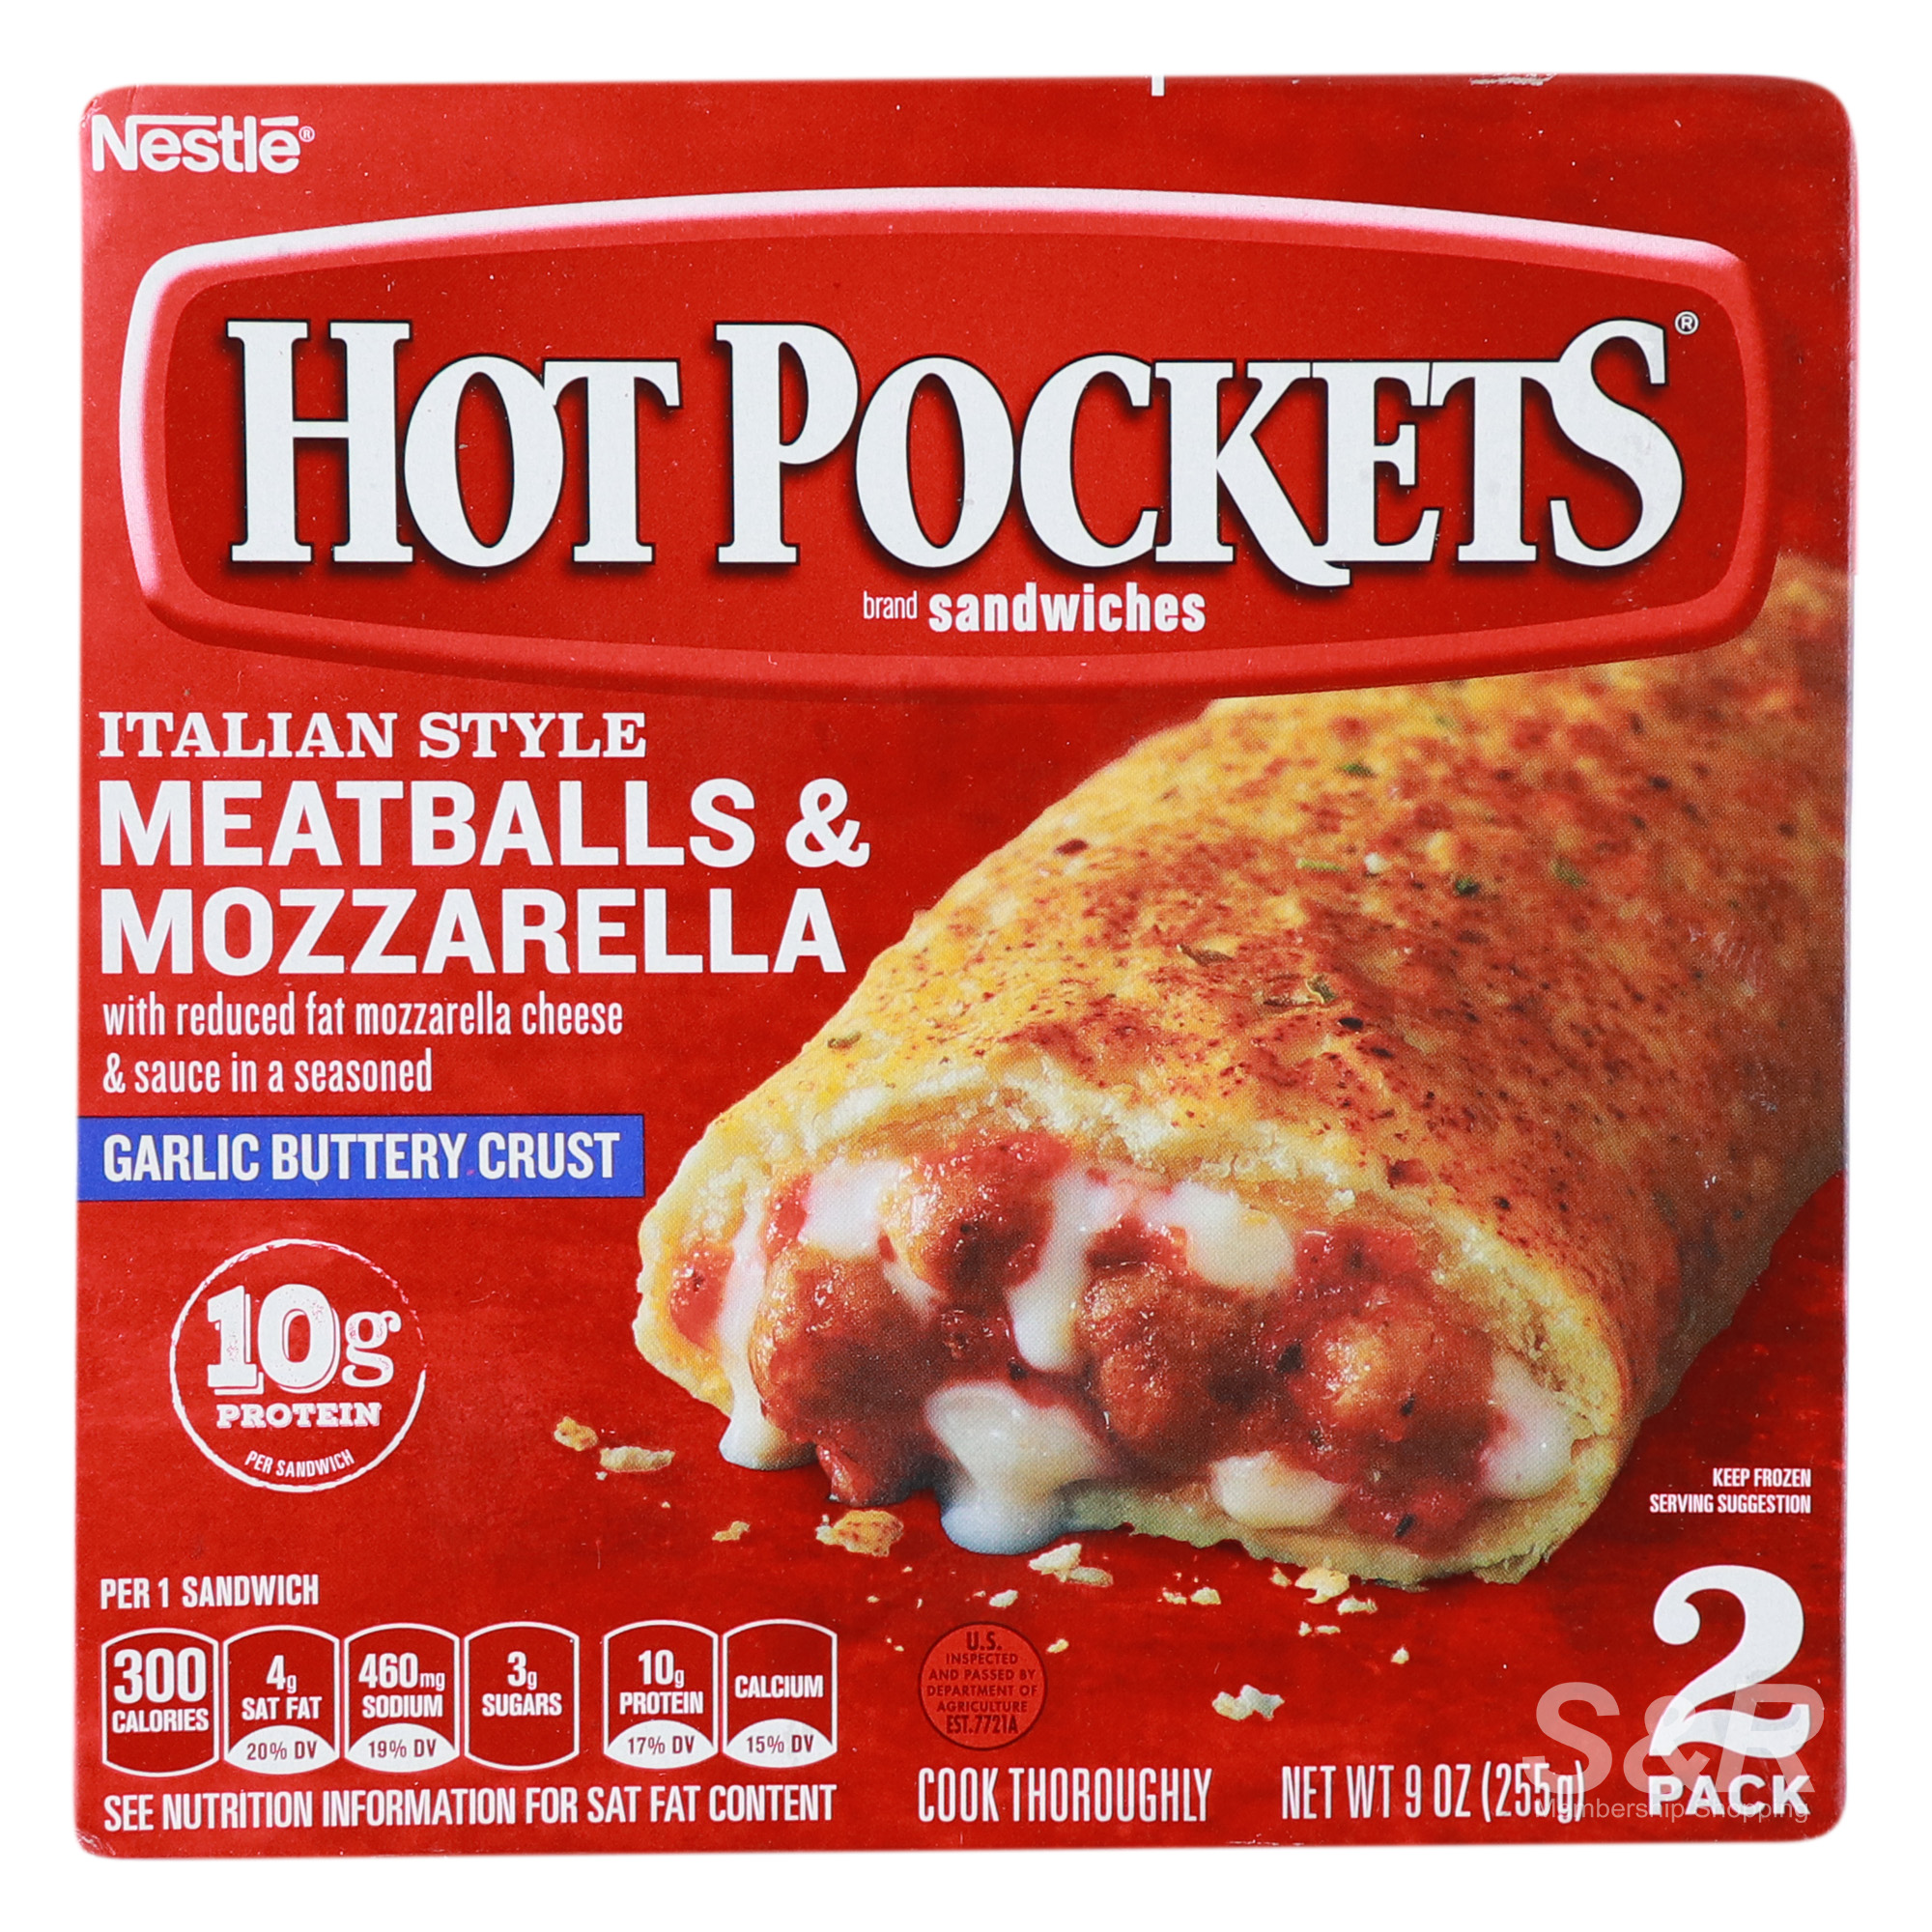 Nestle Hot Pockets Meatballs & Mozzarella Italian Style 2 packs